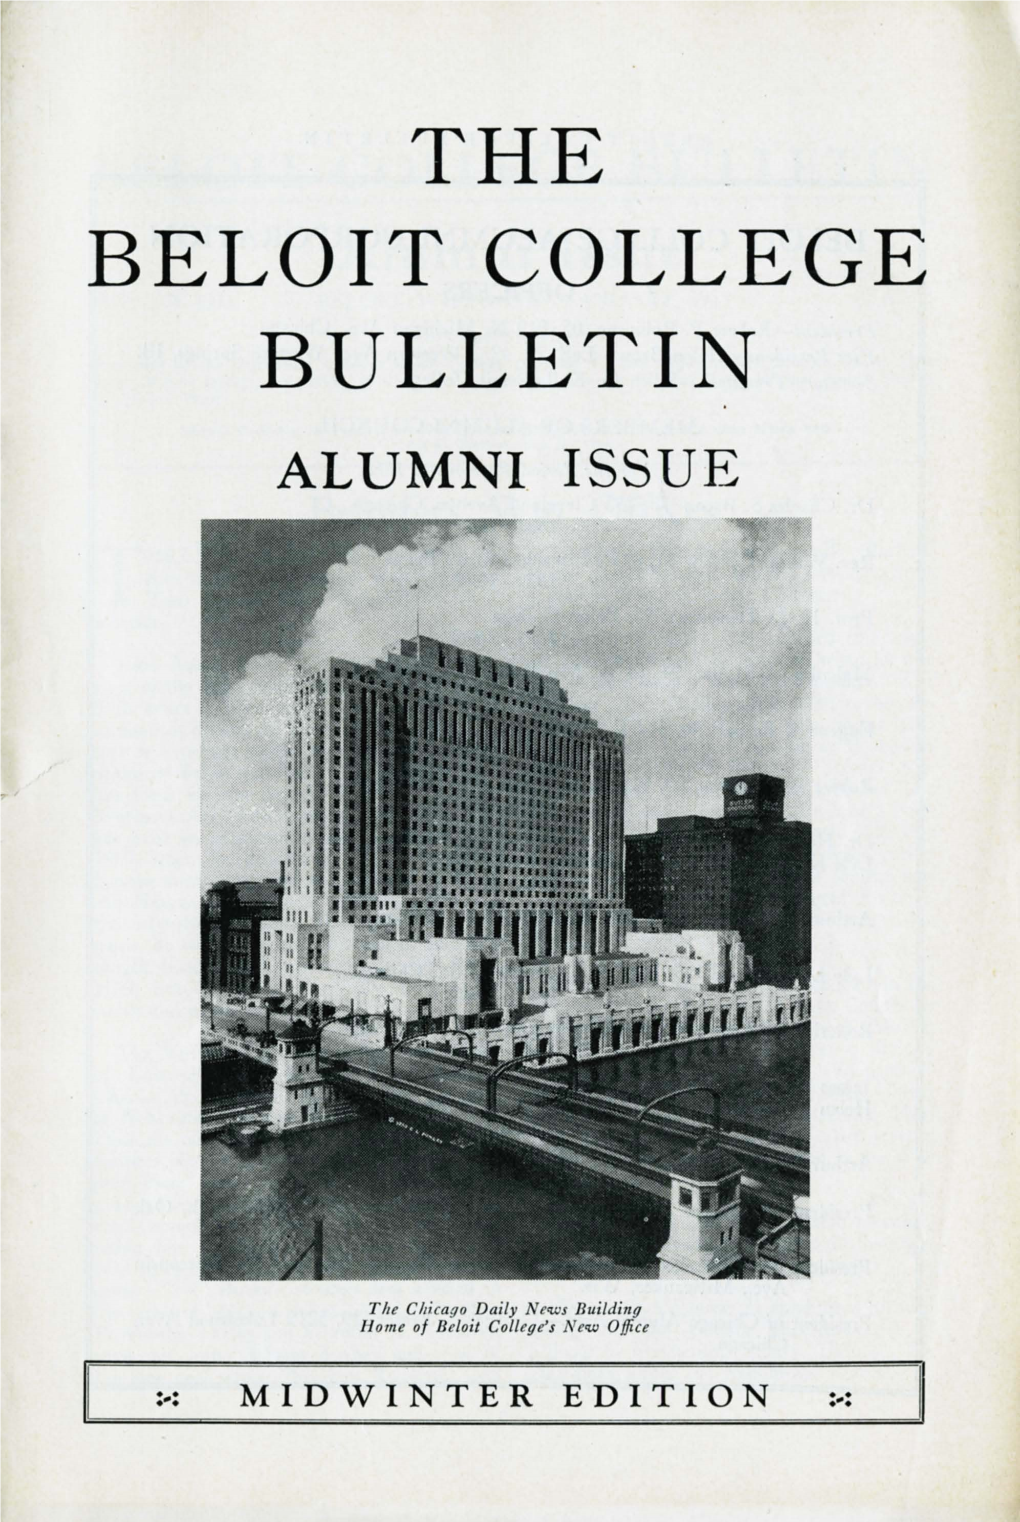 The Beloit College Bulletin Alumni Issue